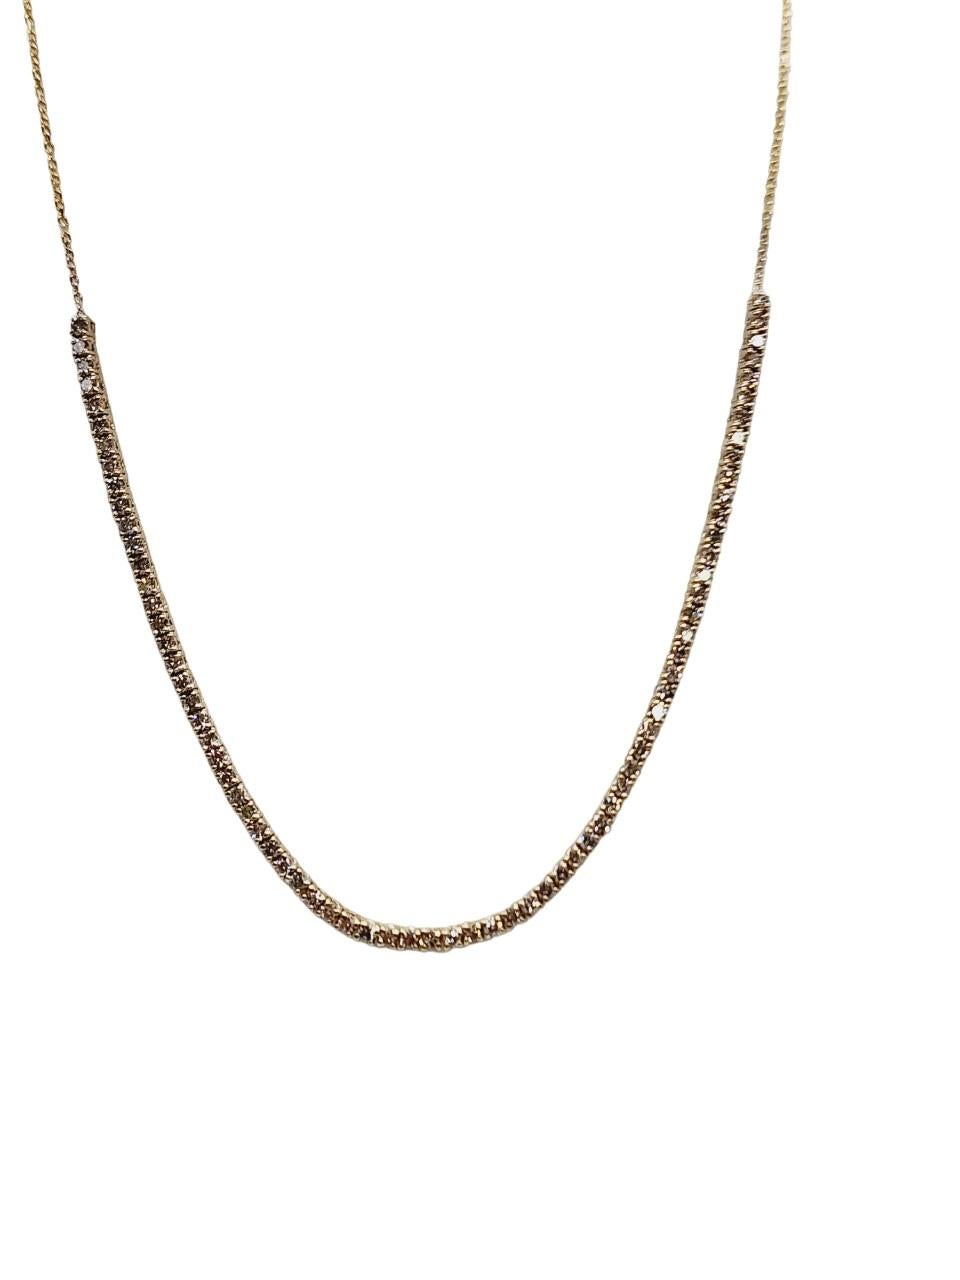 Round Cut 1.65 Carat Mini Diamond Necklace Chain 14 Karat Yellow Gold 22'' For Sale